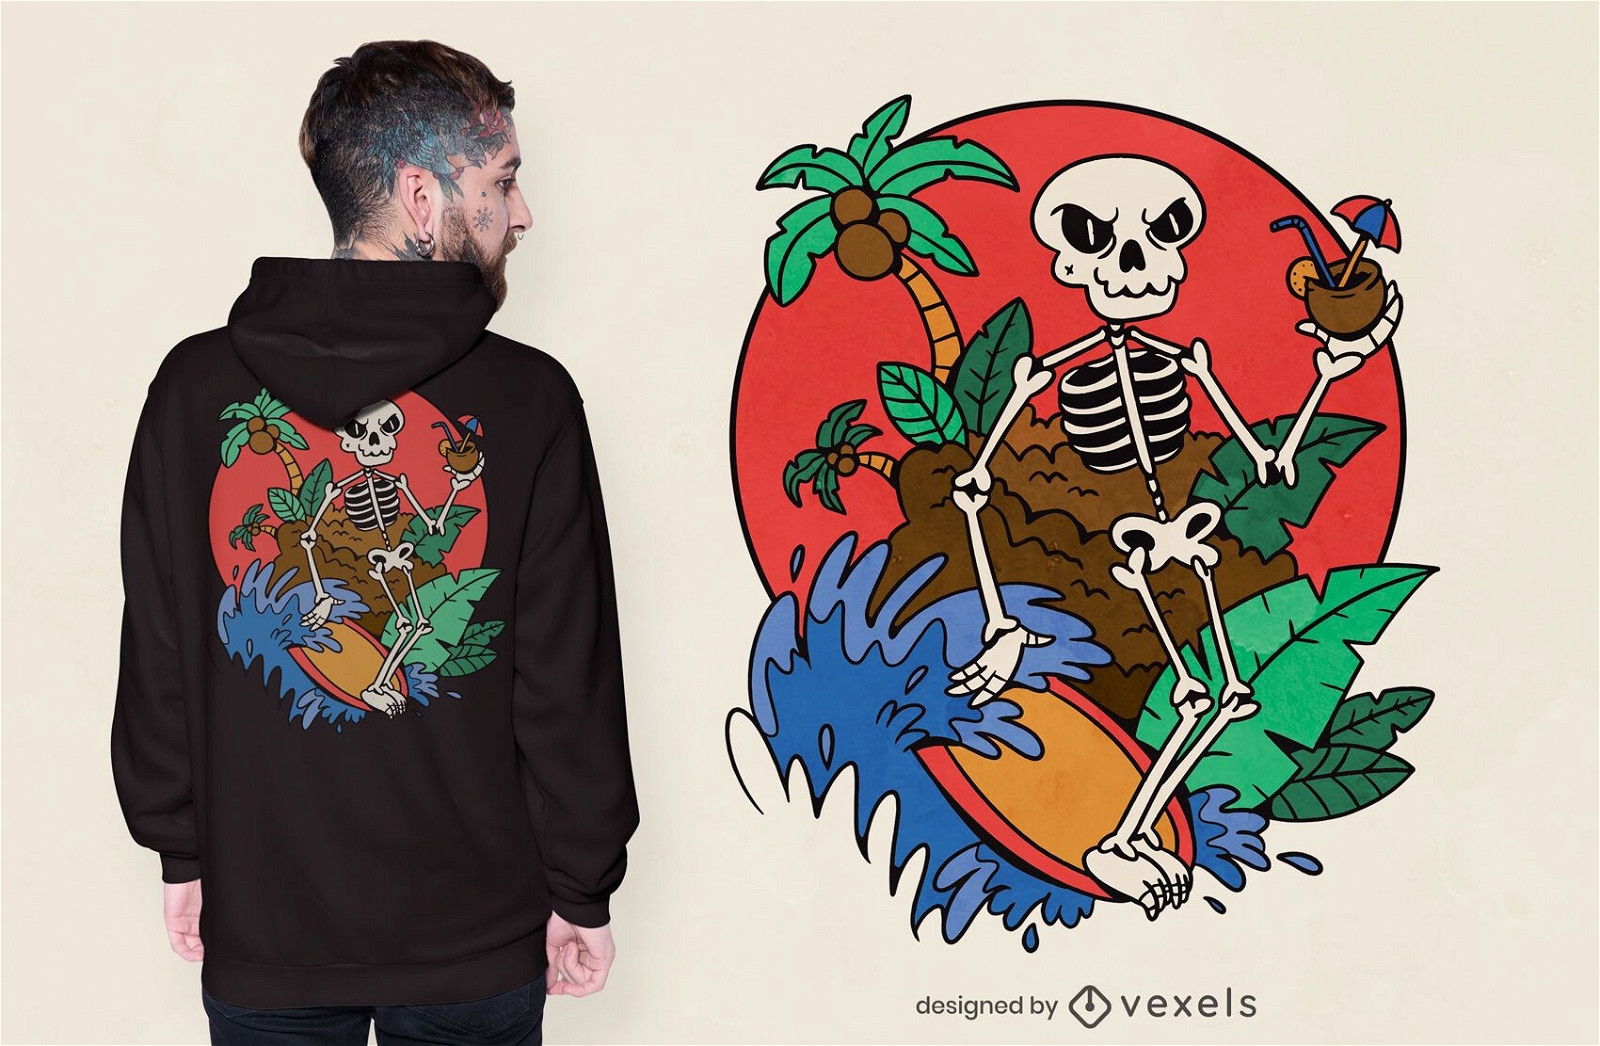 Surfing skeleton t-shirt design